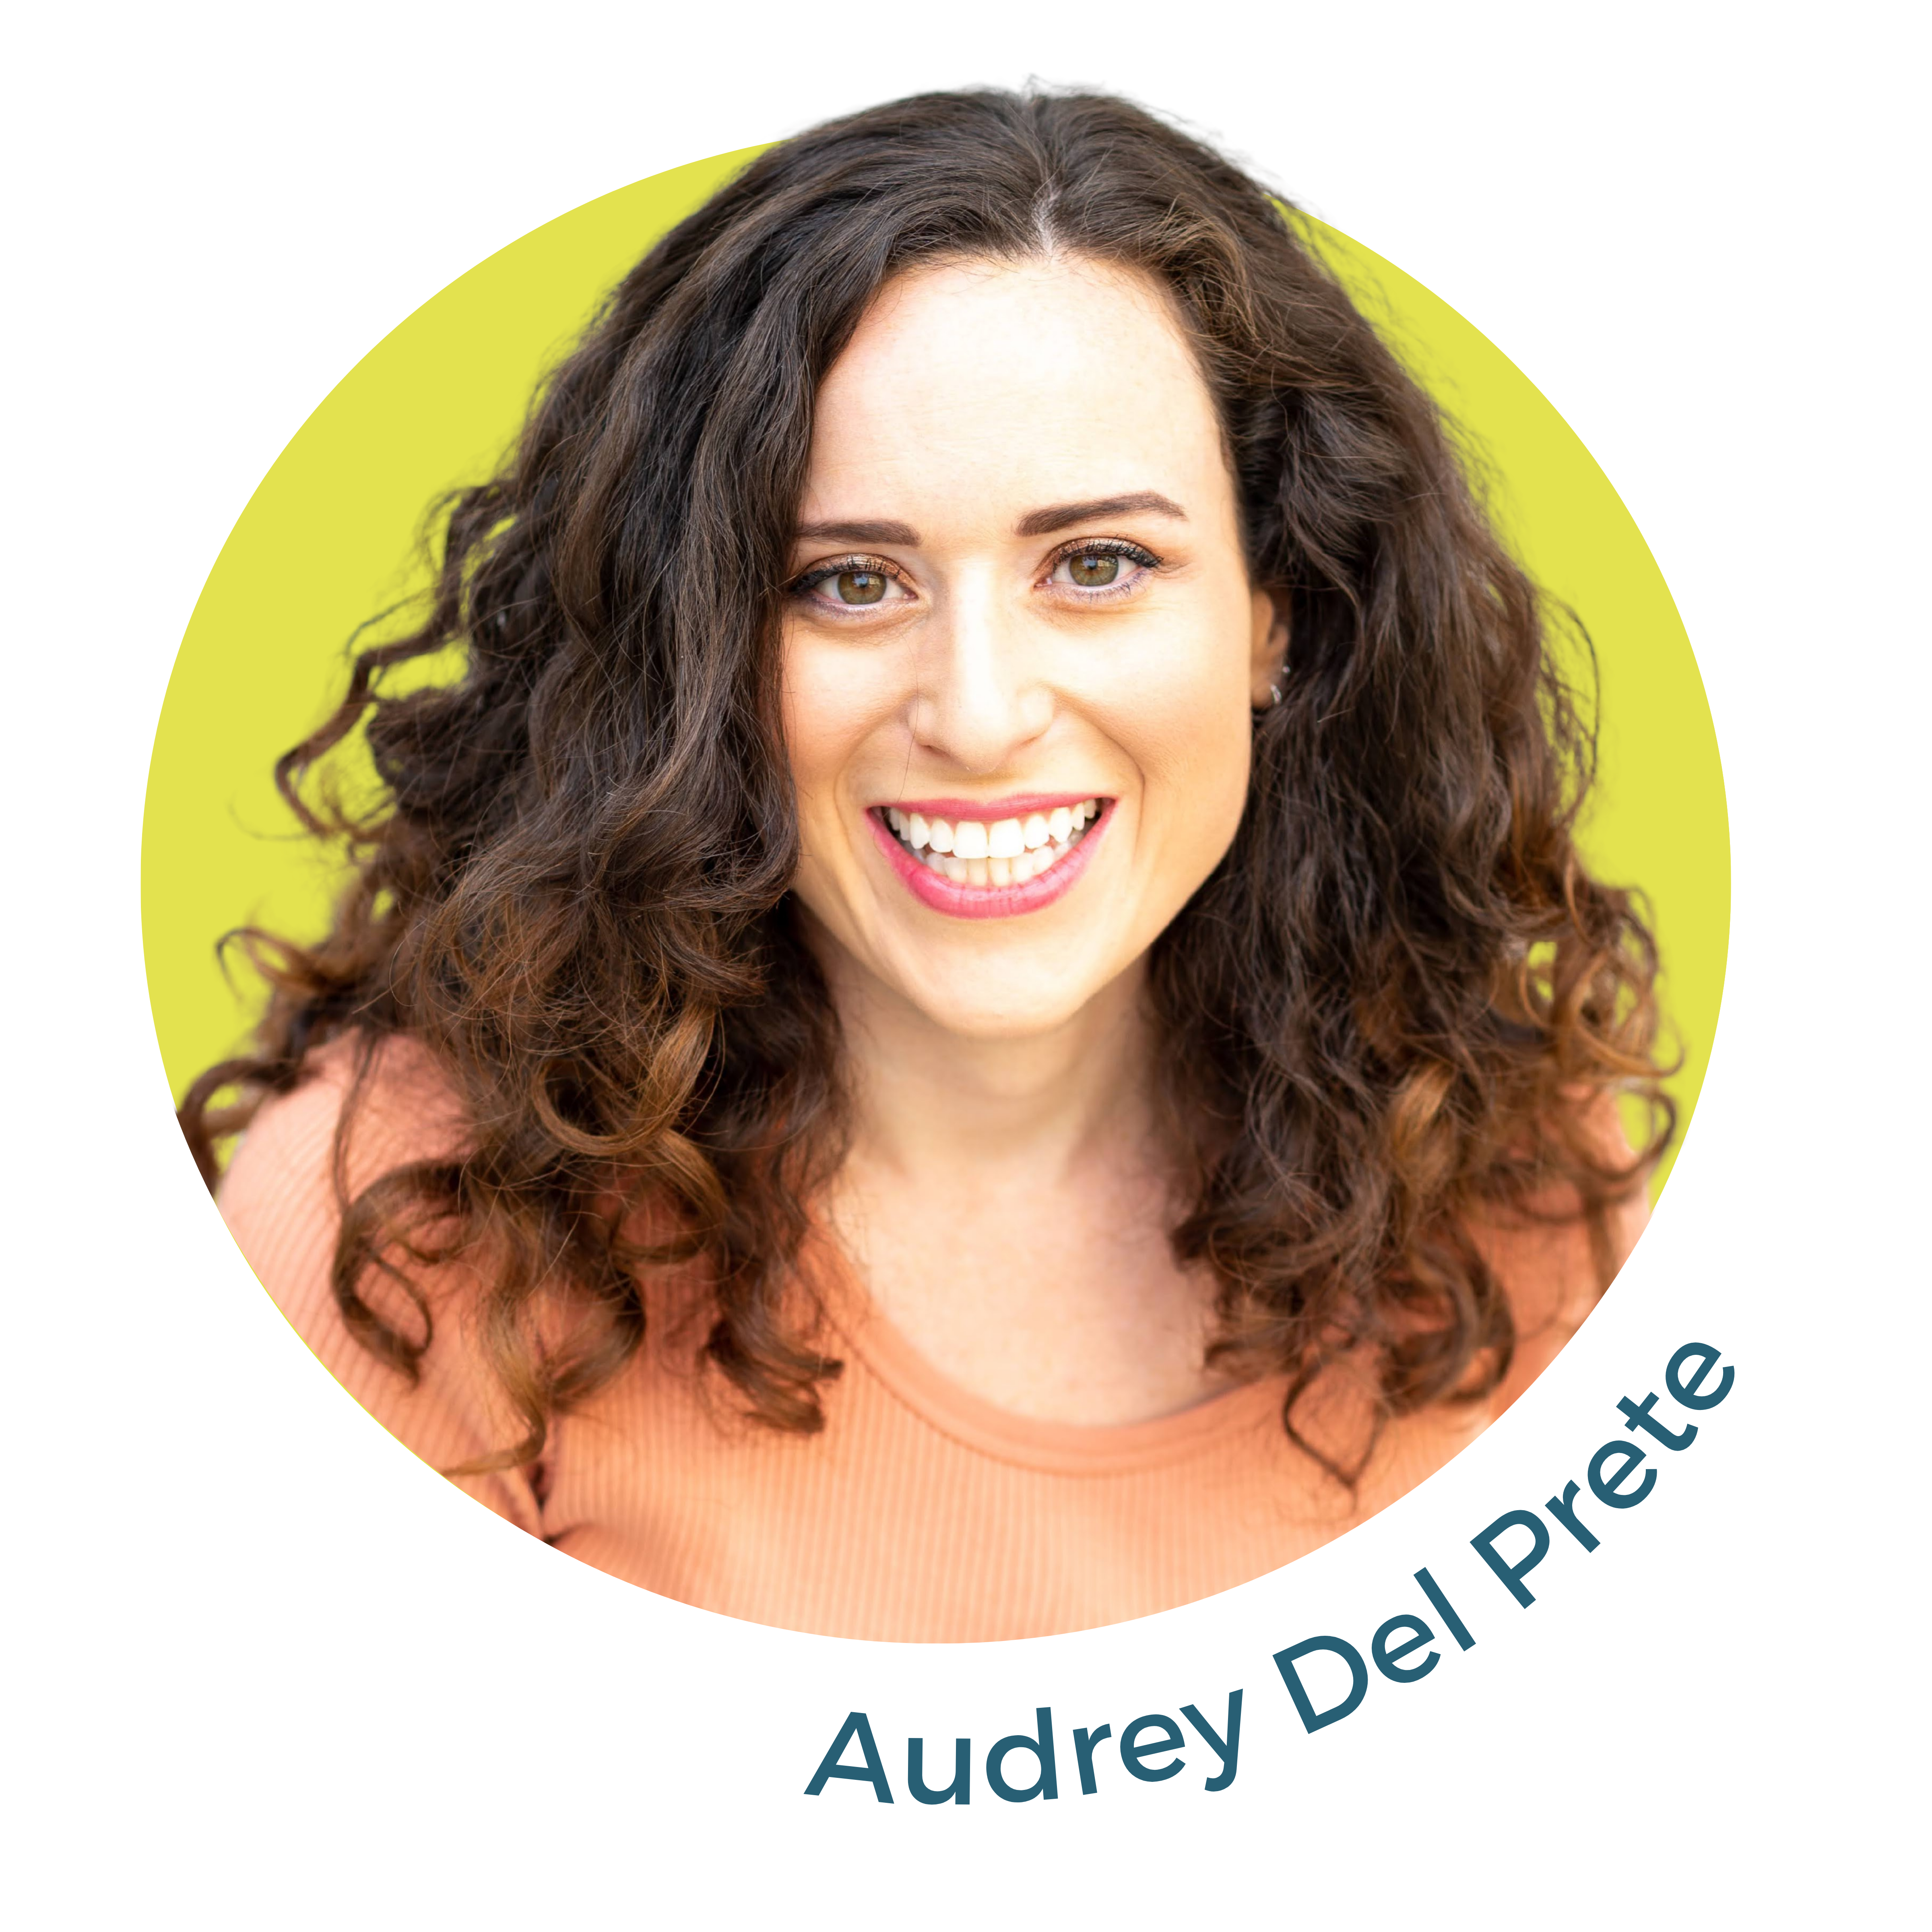 Audrey Del Prete